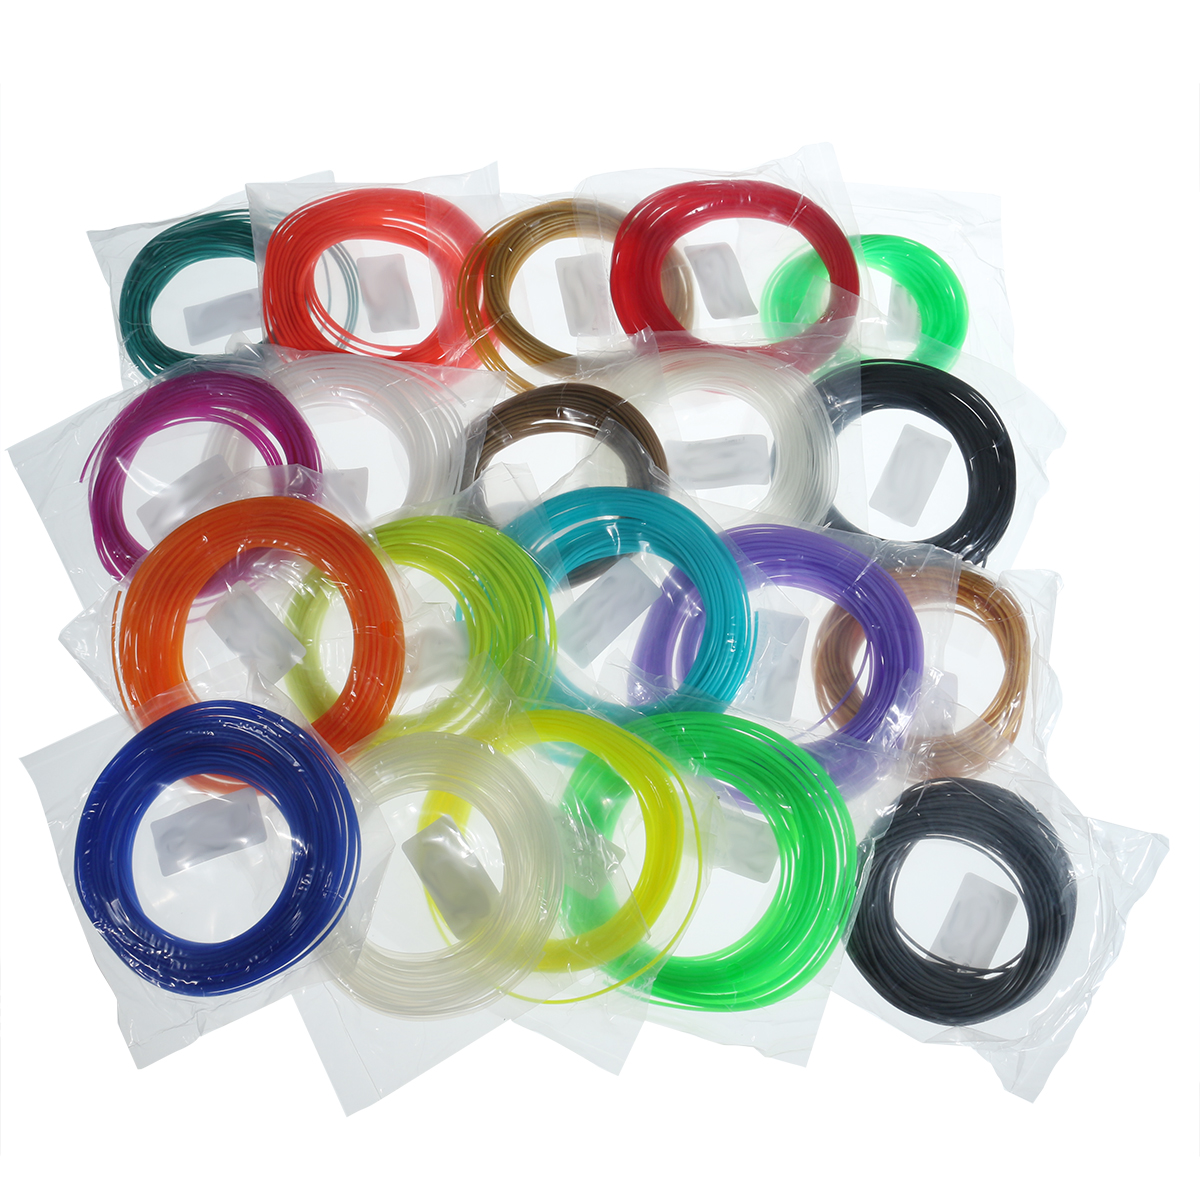 20 Colors/Pack 5/10m Length Per Color PLA 1.75mm Filament for 3D Printing Pen 0.4mm Nozzle 35